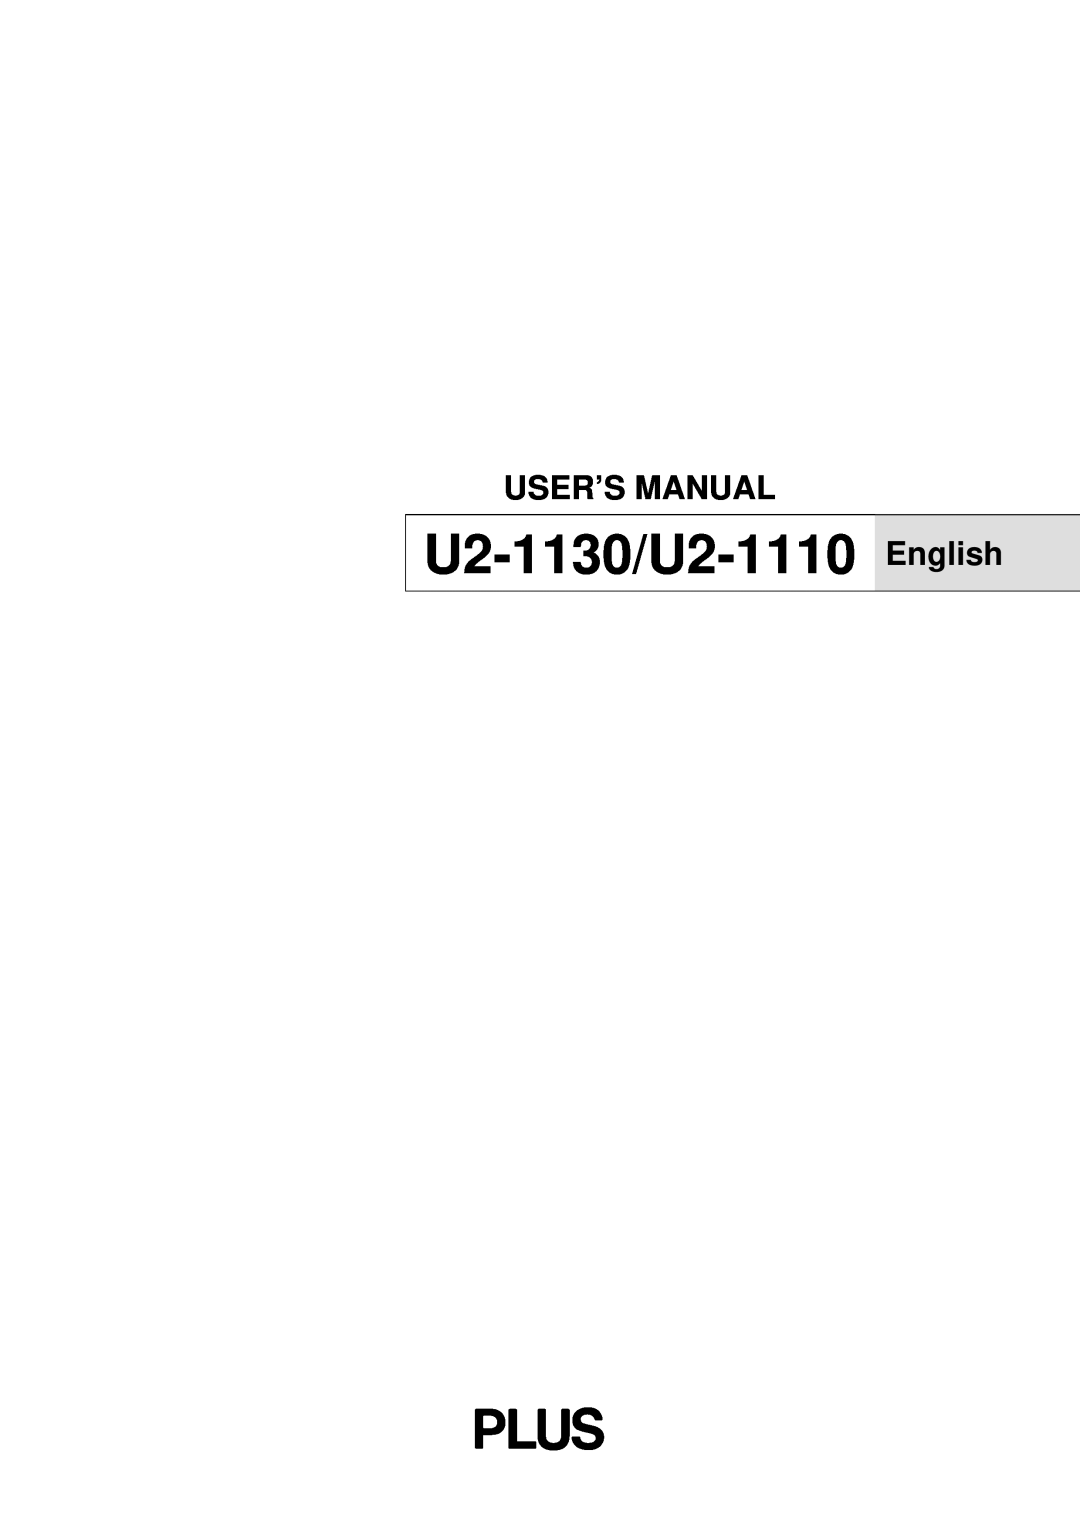 PLUS Vision user manual U2-1130/U2-1110 English, User’S Manual 